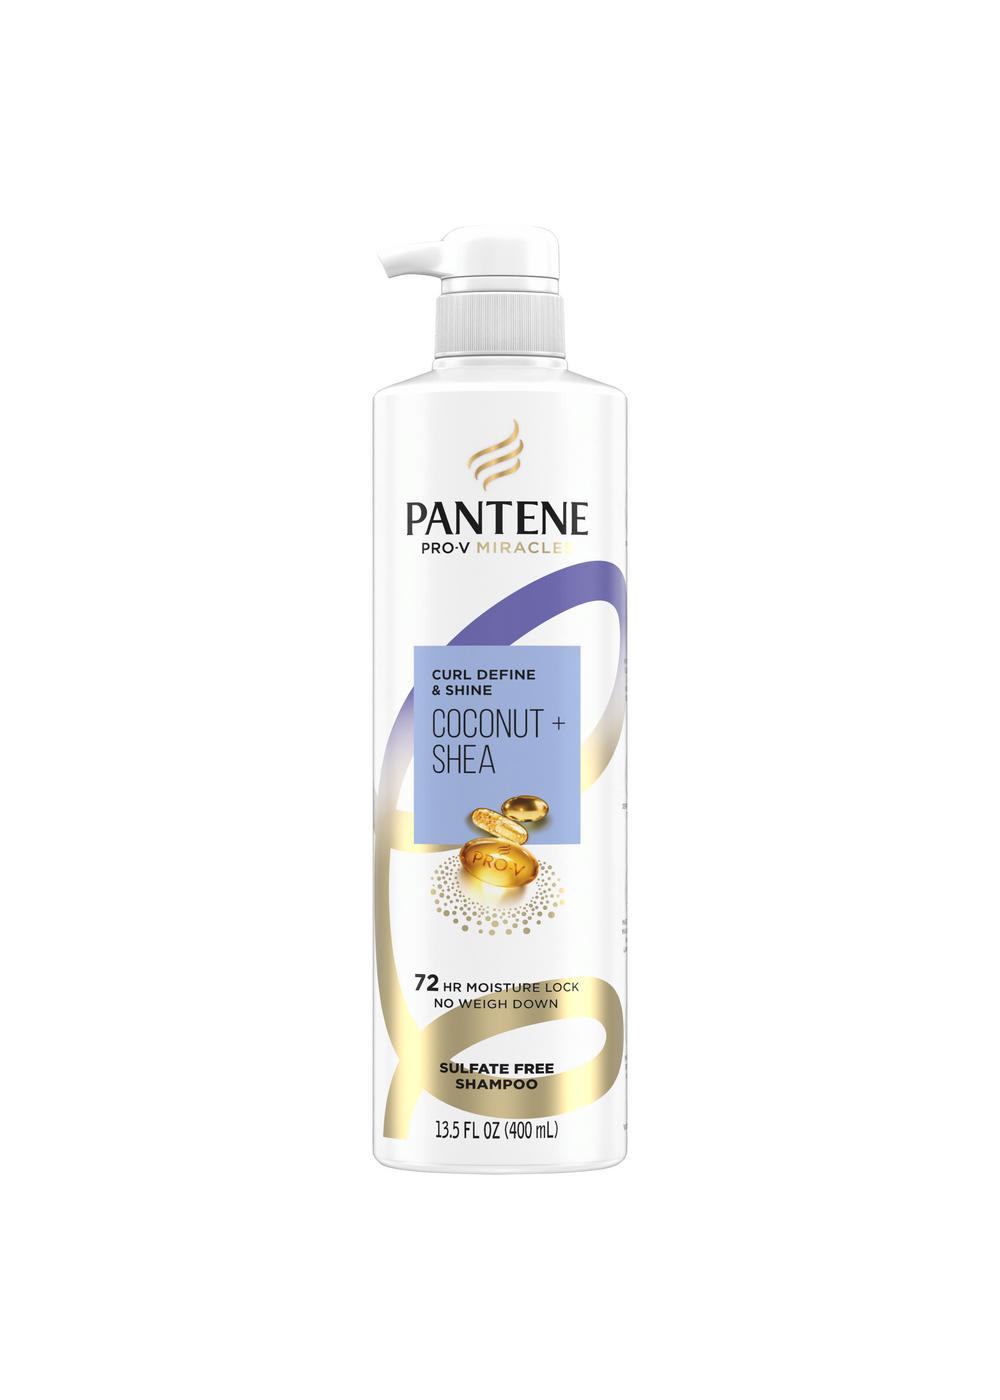 Pantene Curl Define & Shine Coconut + Shea - Shampoo; image 1 of 2